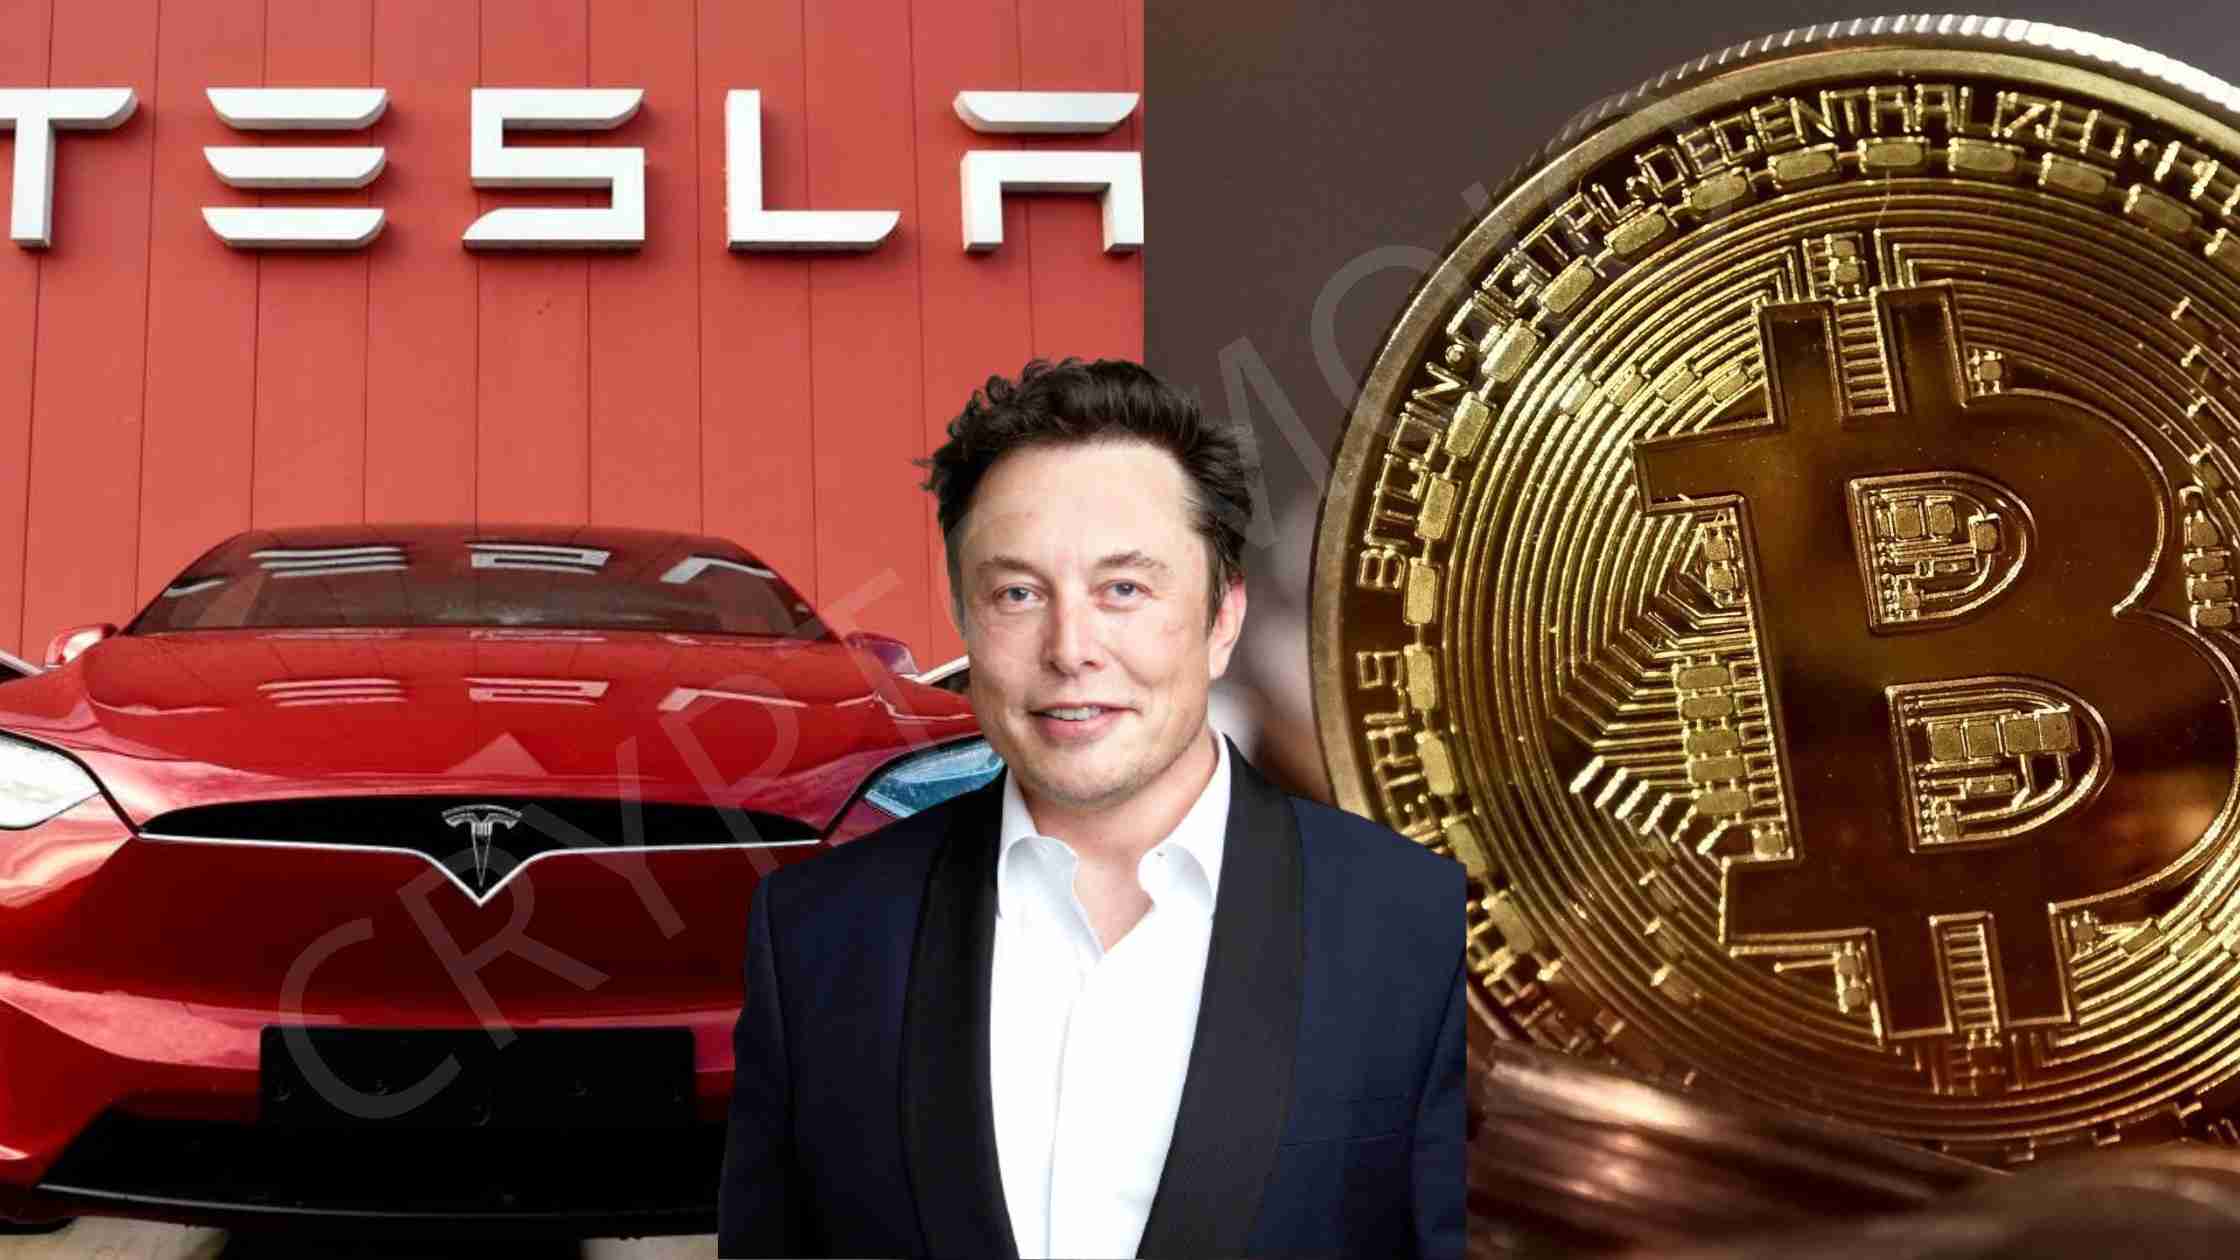 Did Elon Musk Make A Bitcoin Withdrawal Before Tesla Could Go Bankrupt